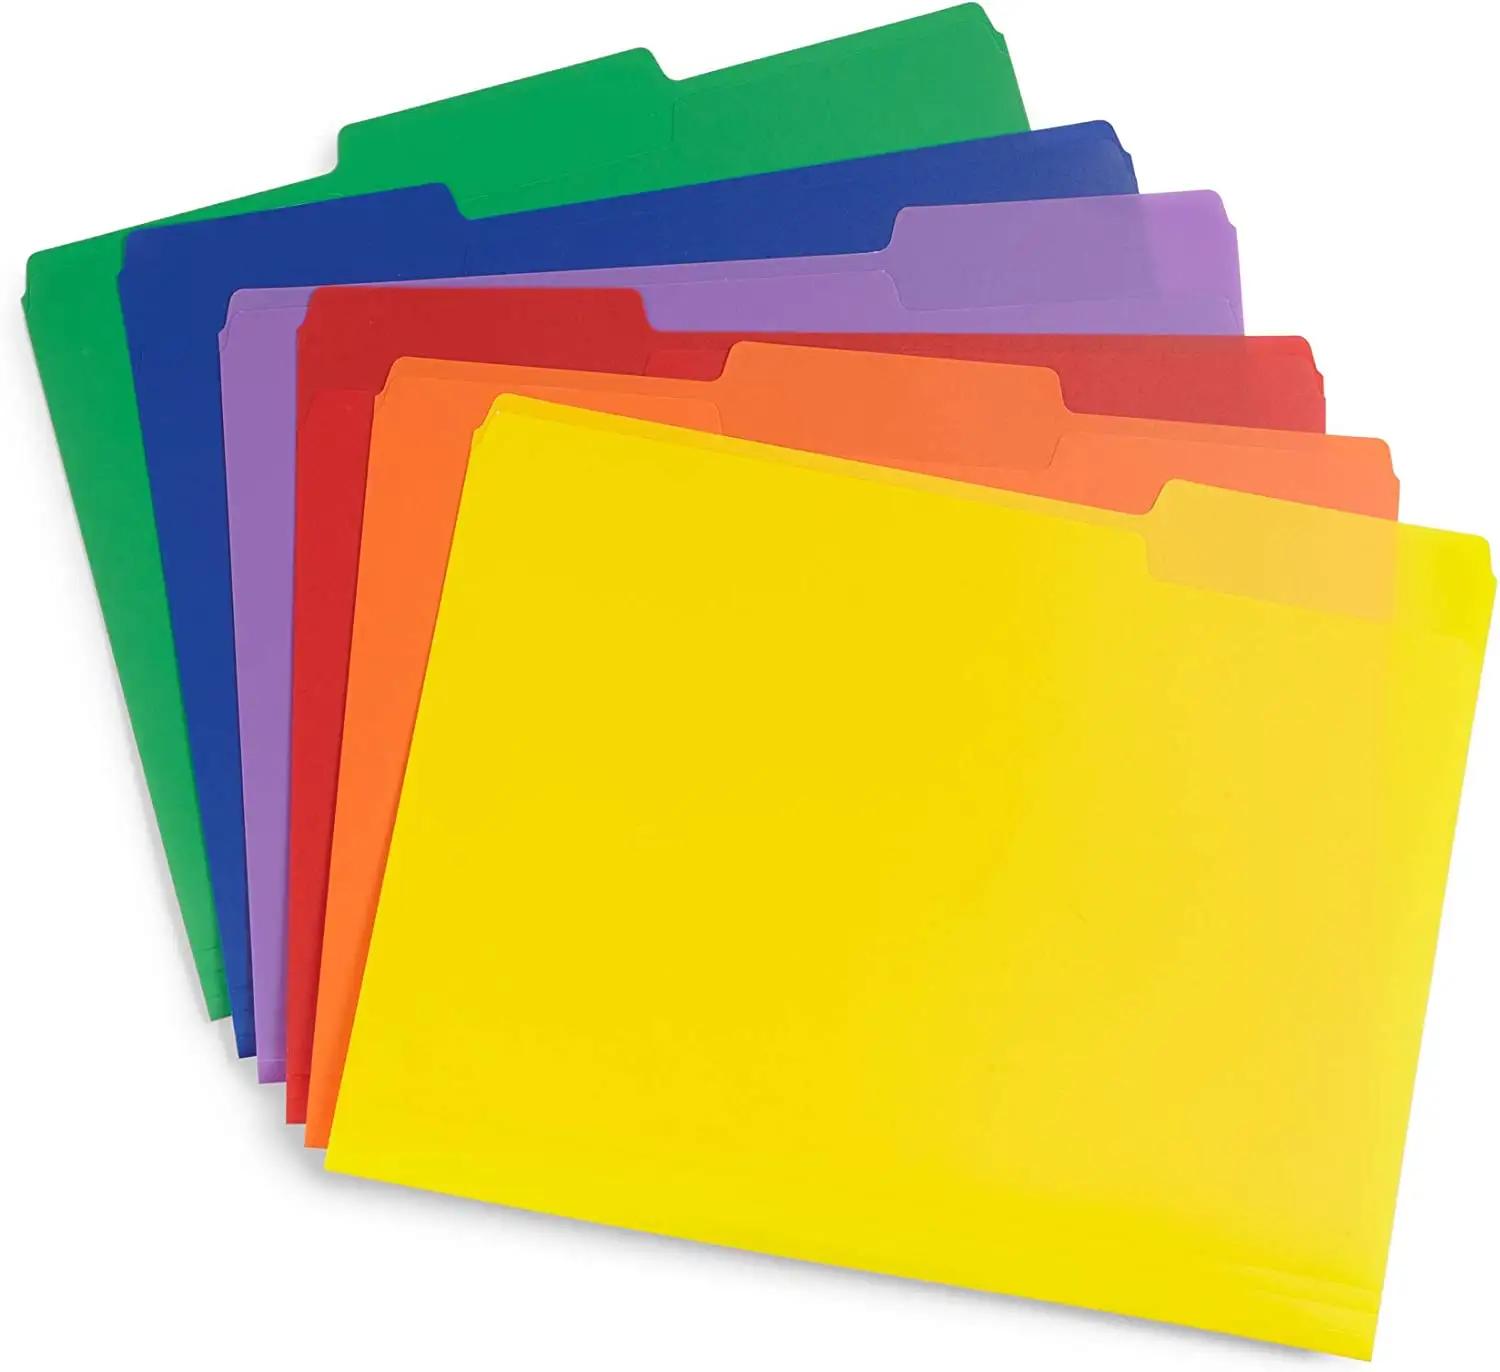 Hot selling Plastic 3 Tab Letter Size Multi Colored 1/3-Cut Tab File Folder